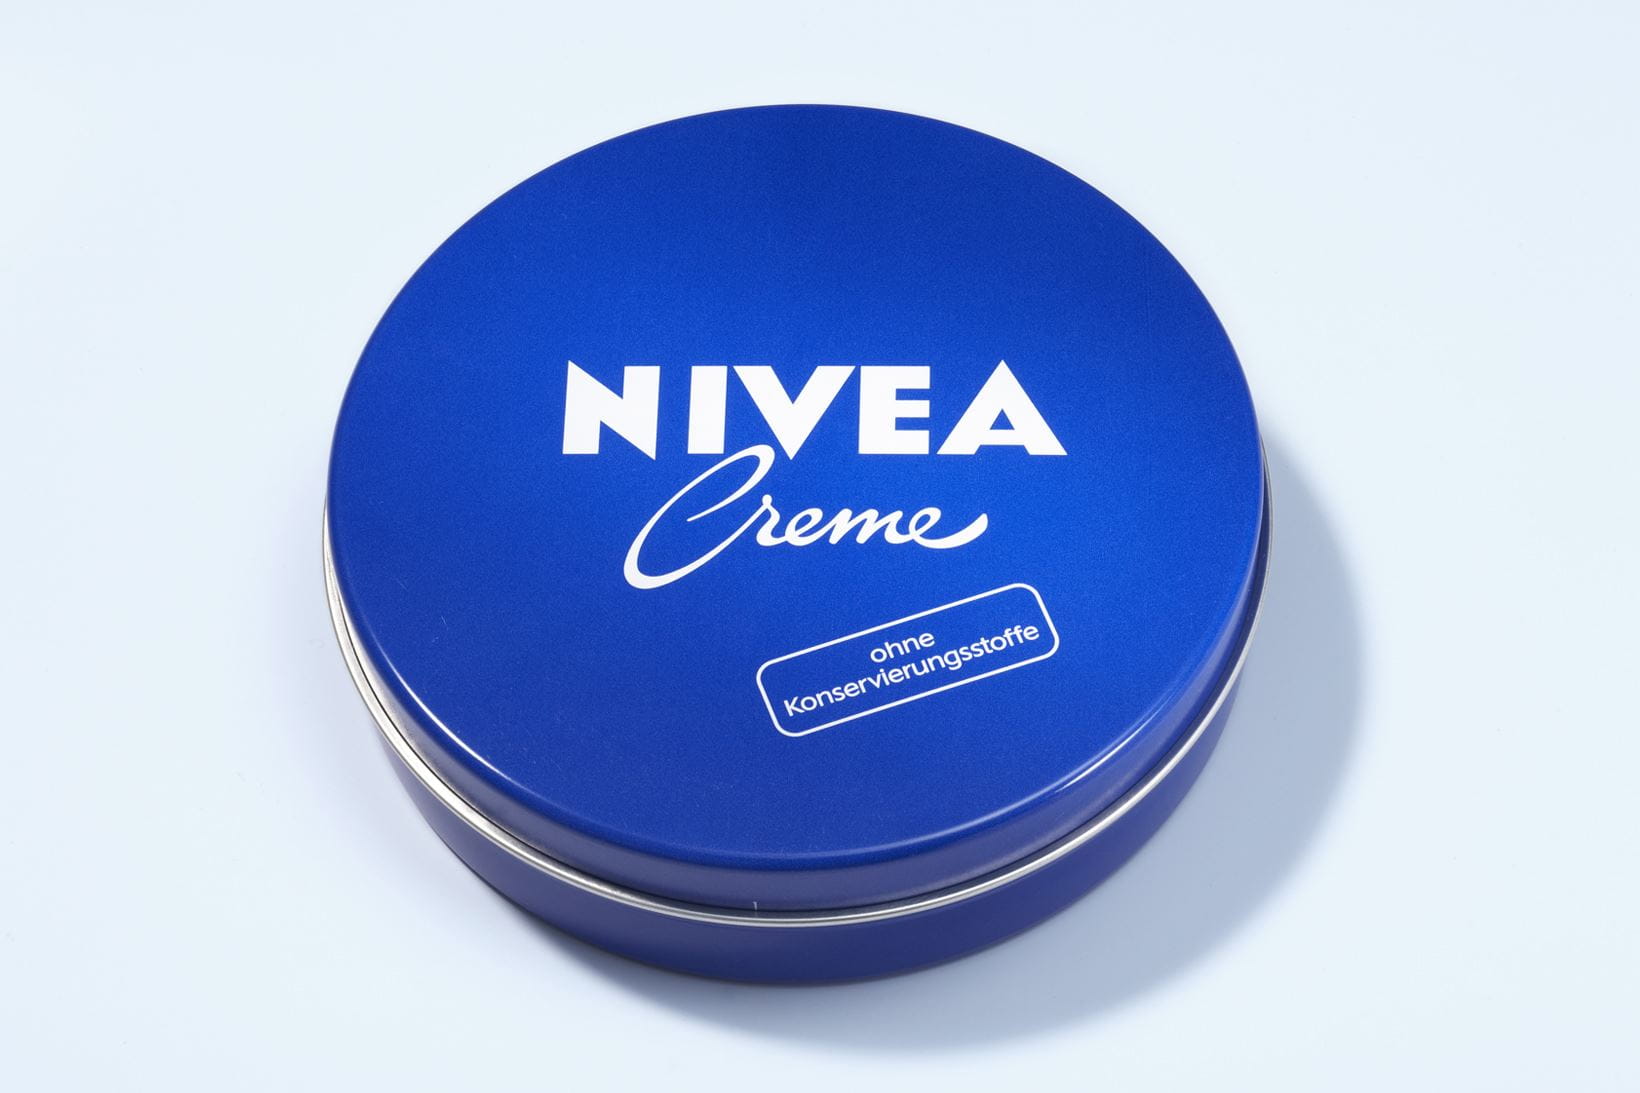 NIVEA Creme 1993